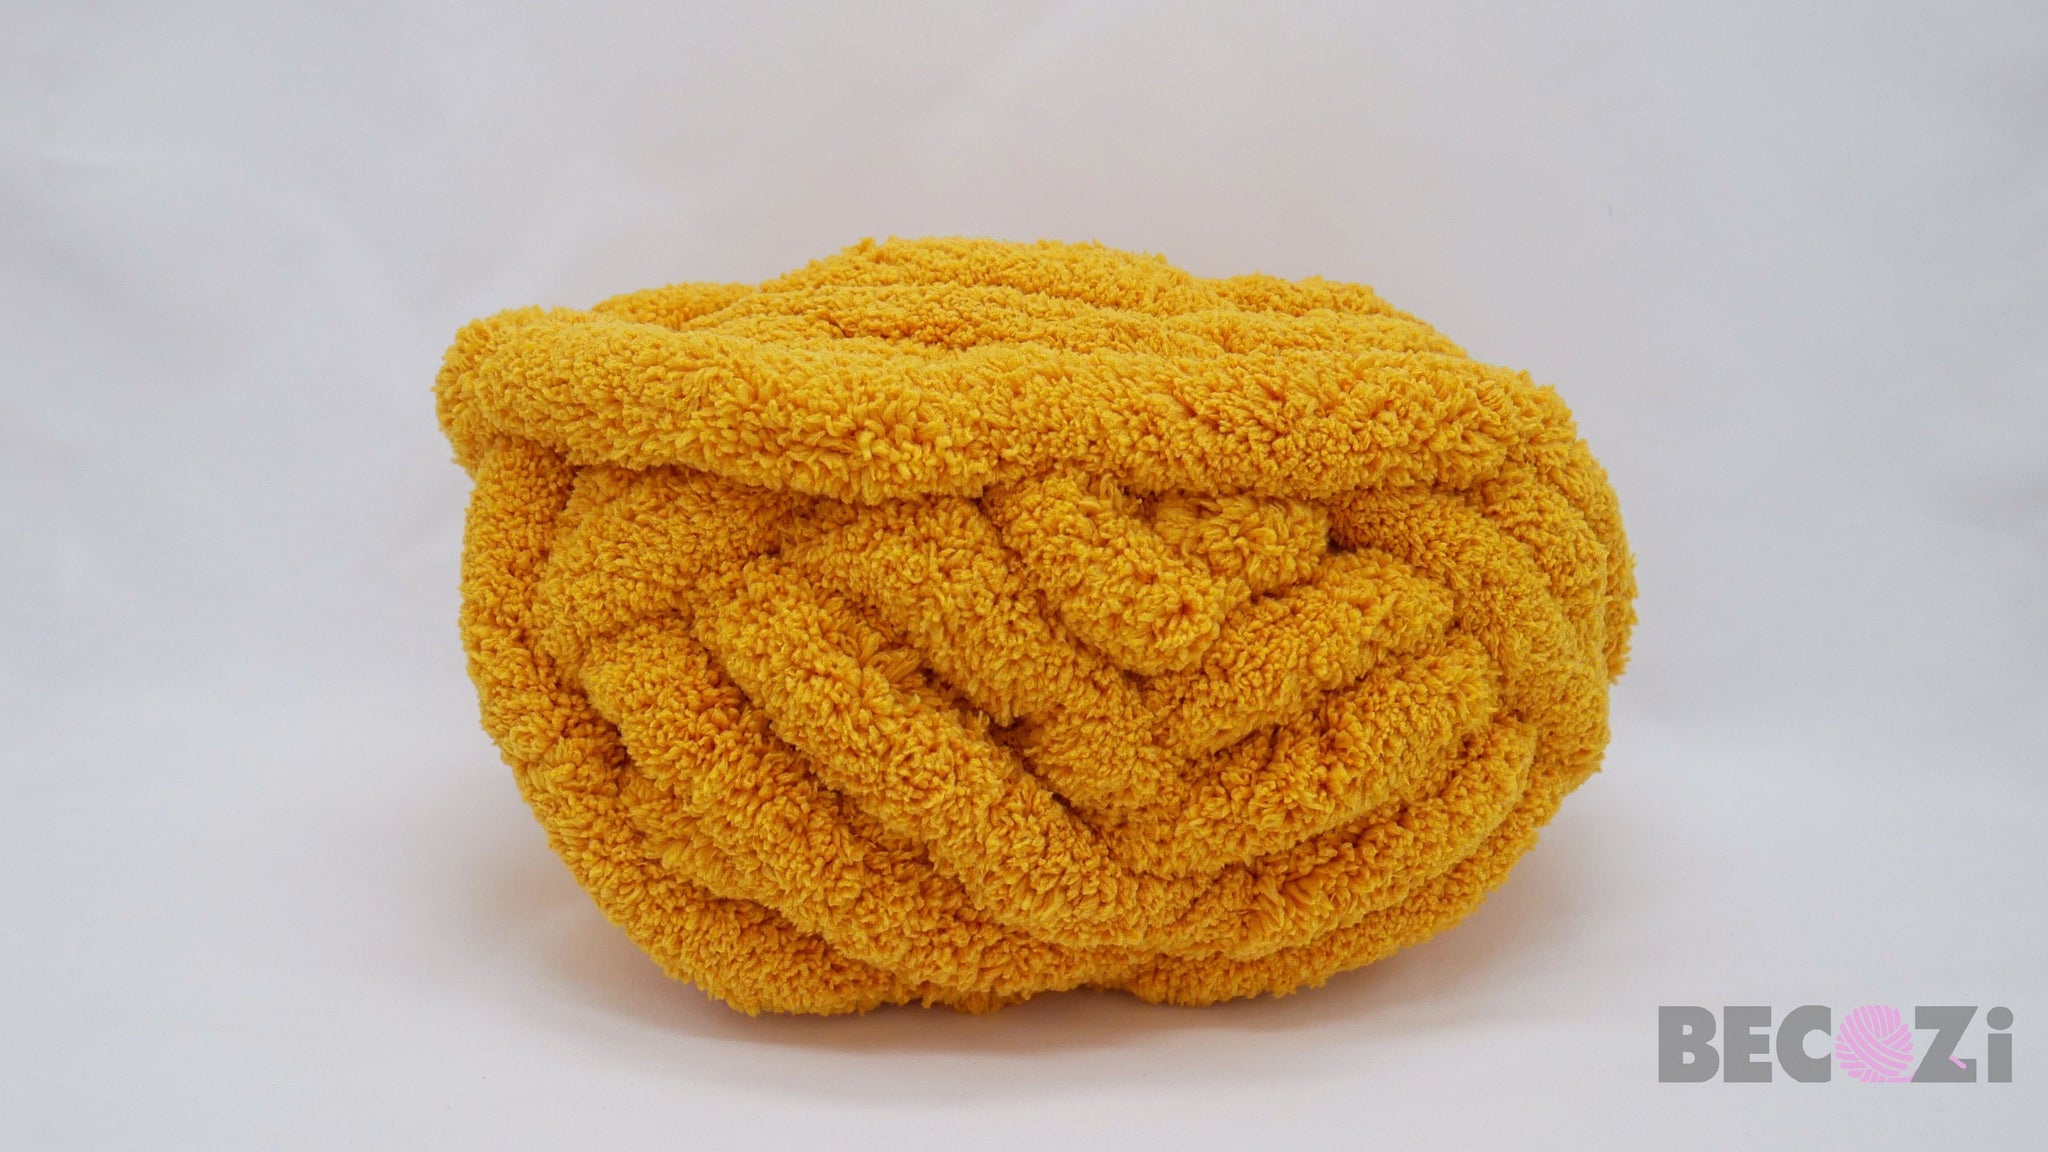 Where to buy Jumbo Chenille Yarn in bulk? : r/crochet